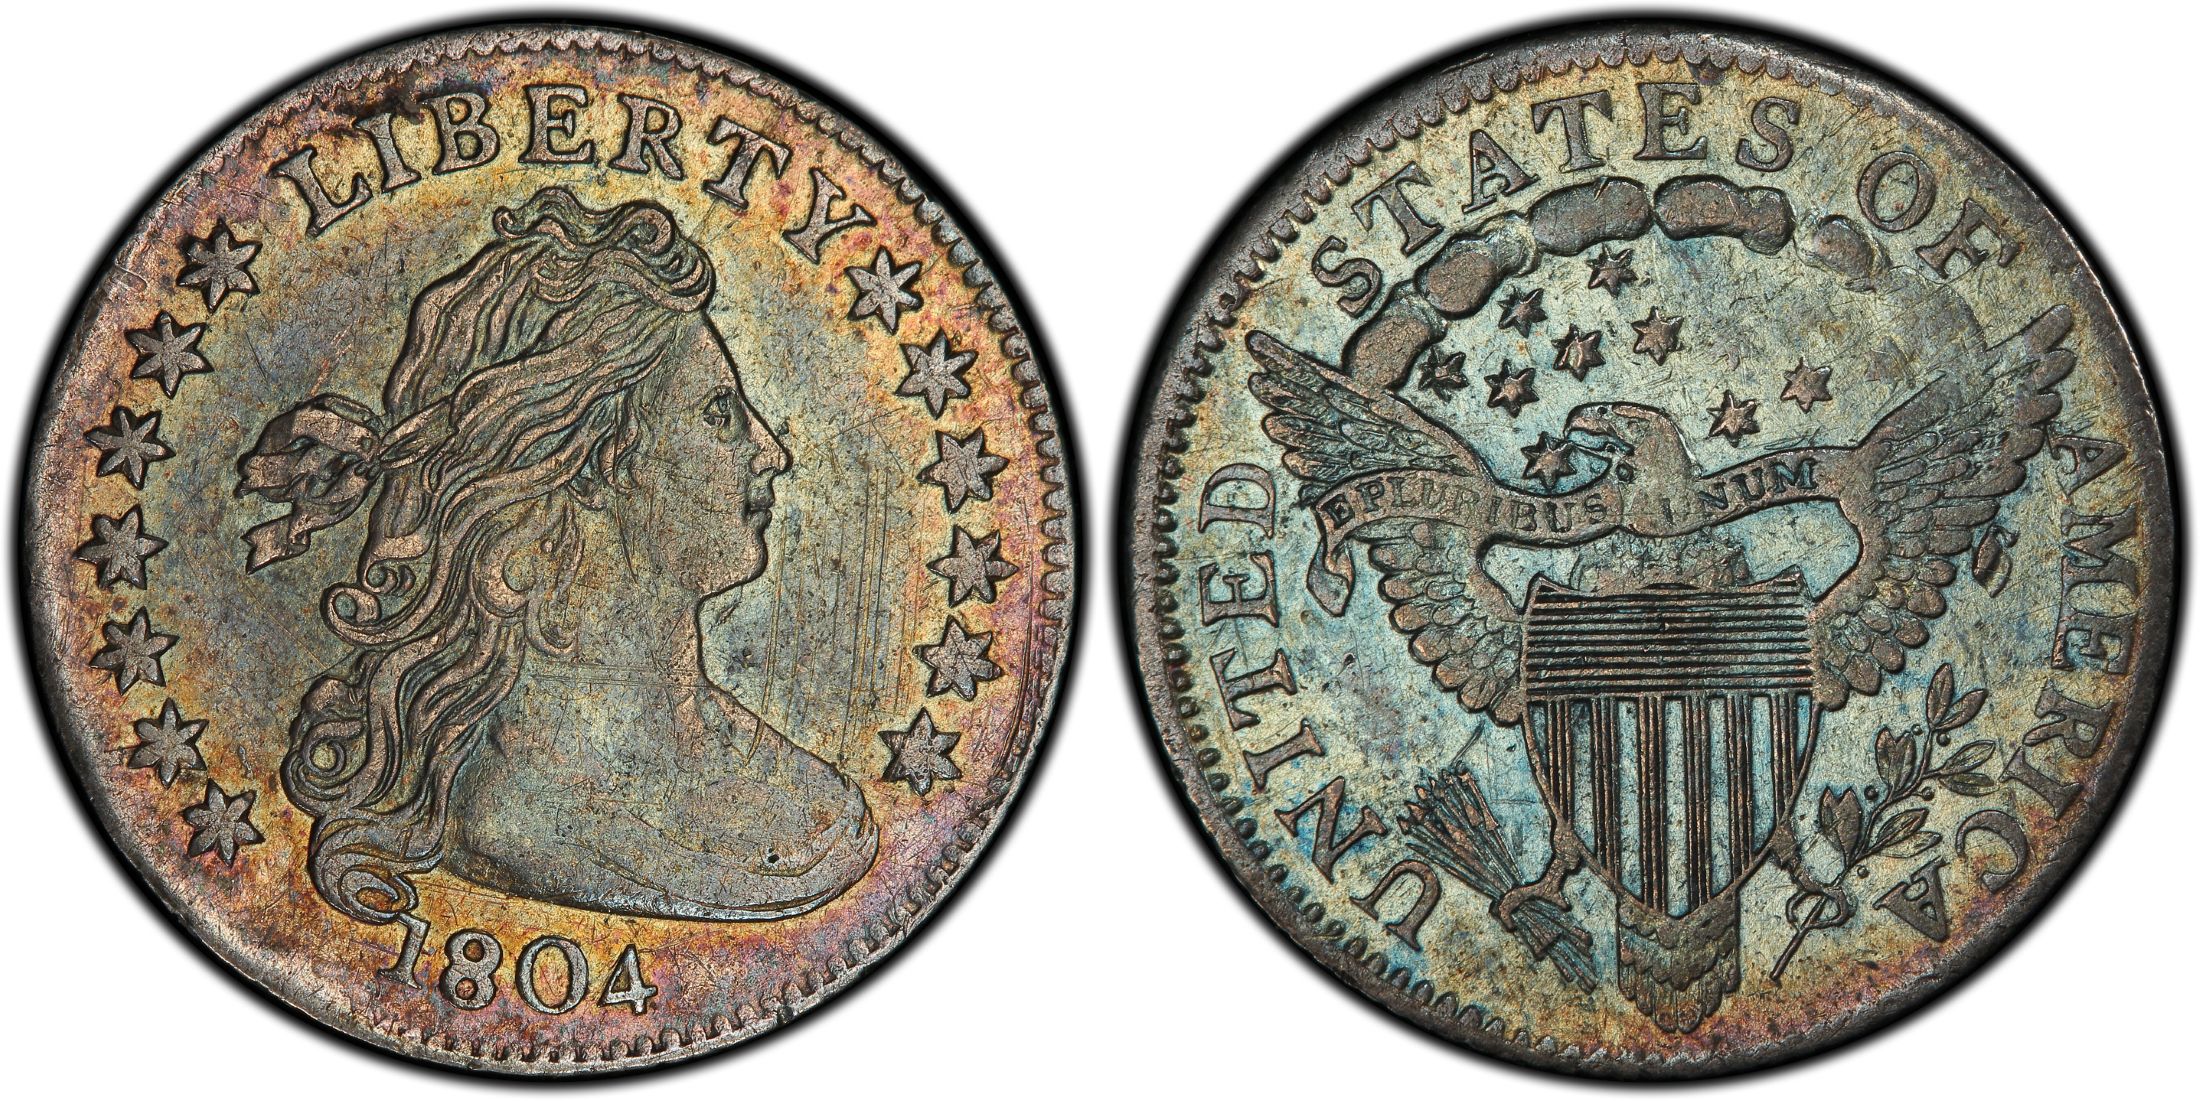 US Coin - 1804 - Draped Bust Dime - Philadelphia